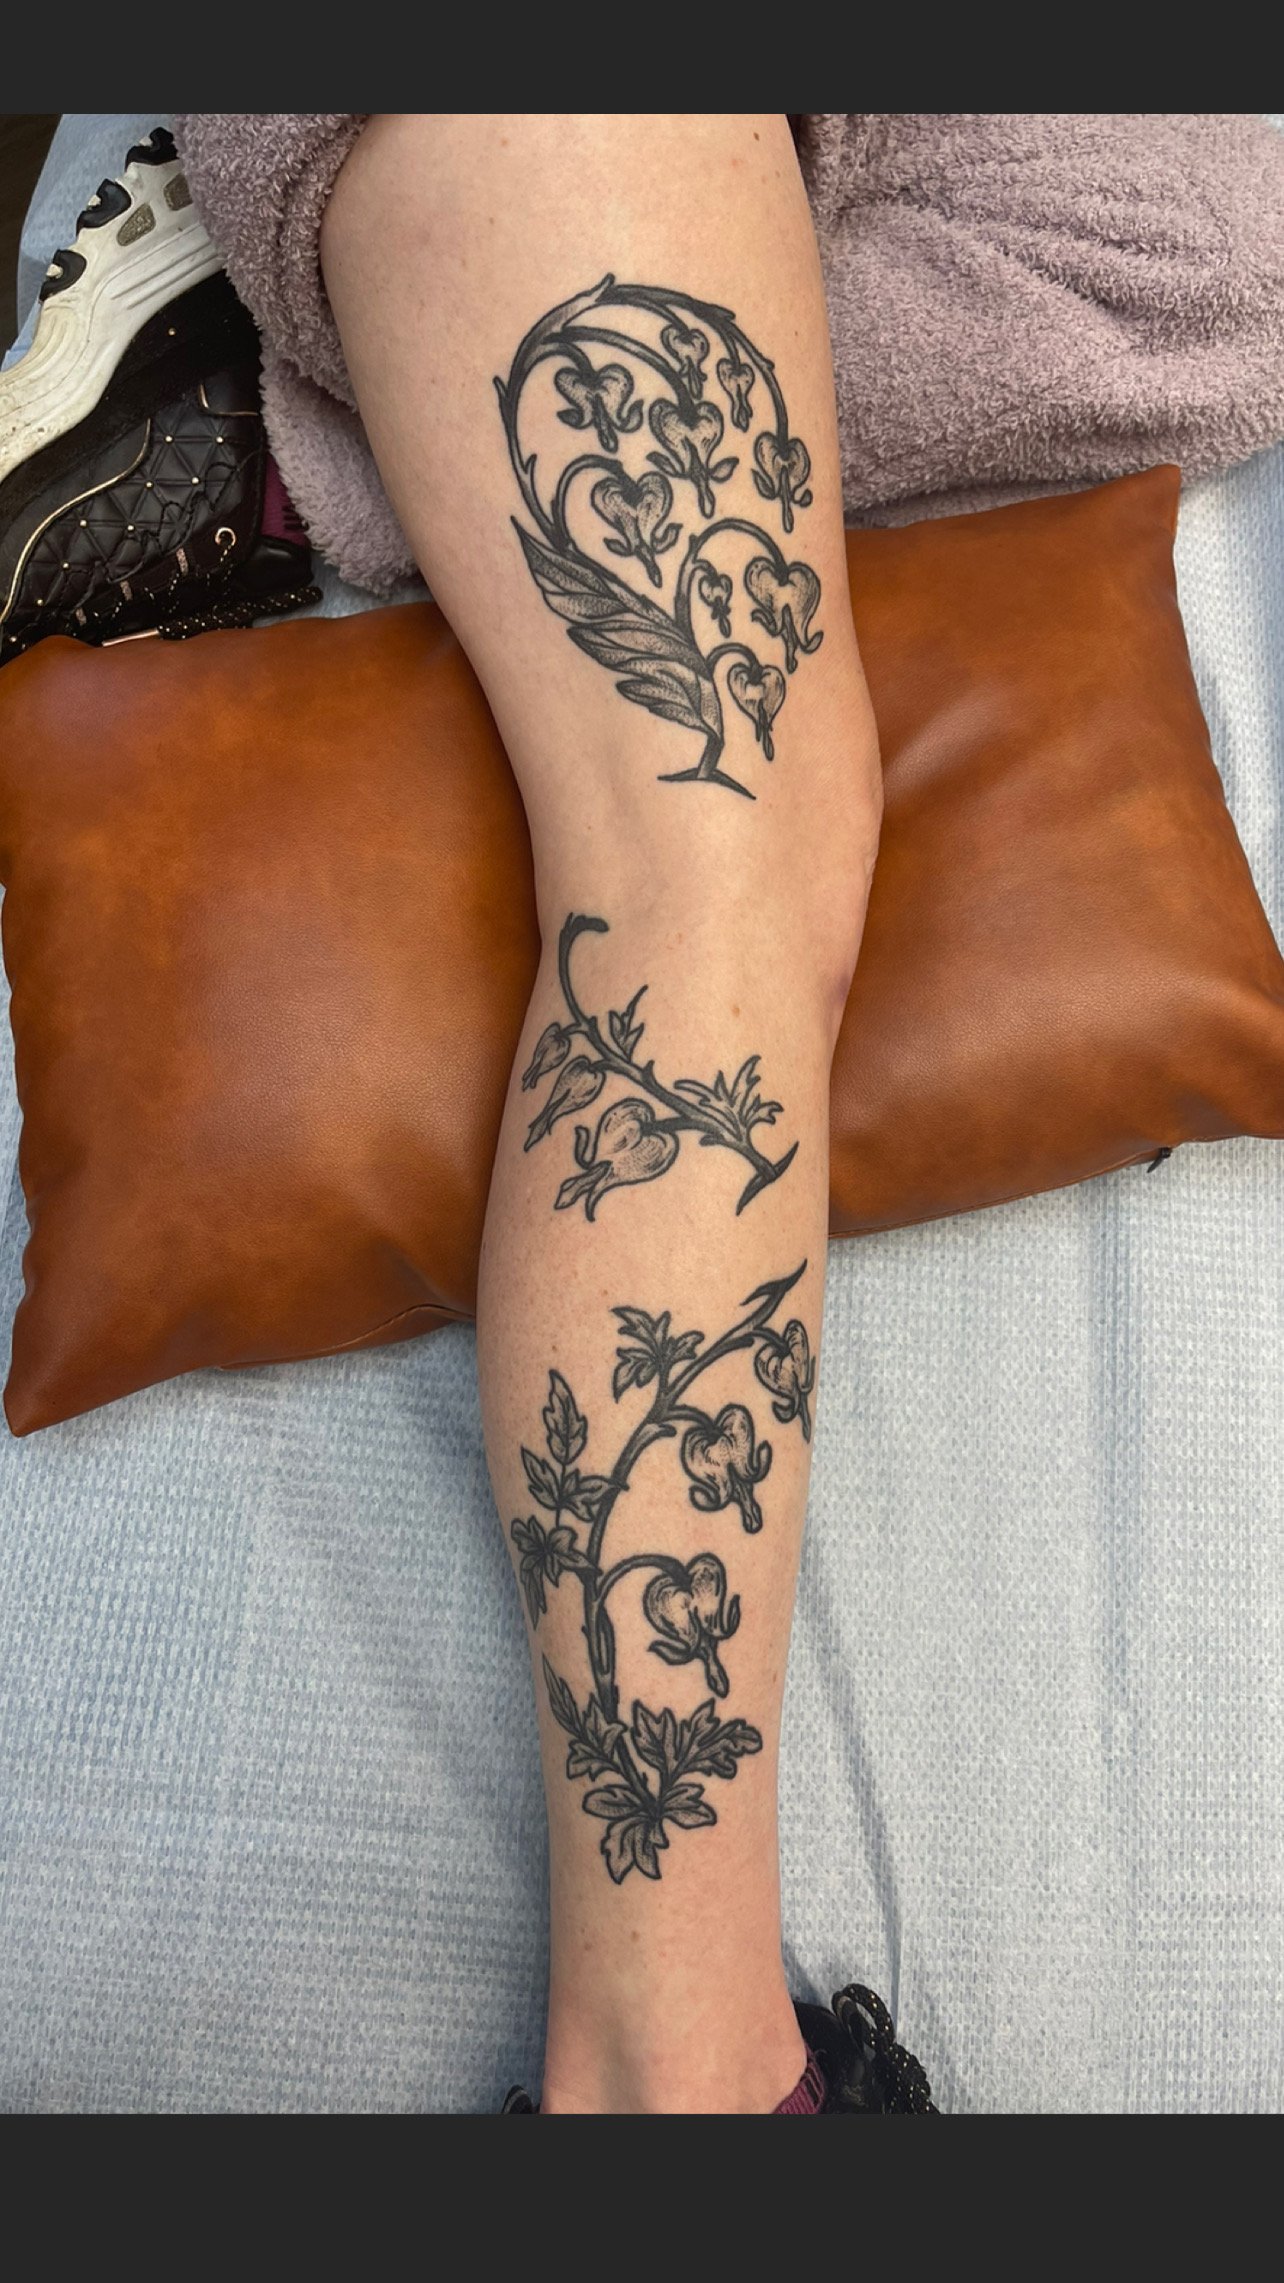 Tattoos for Women - Vines